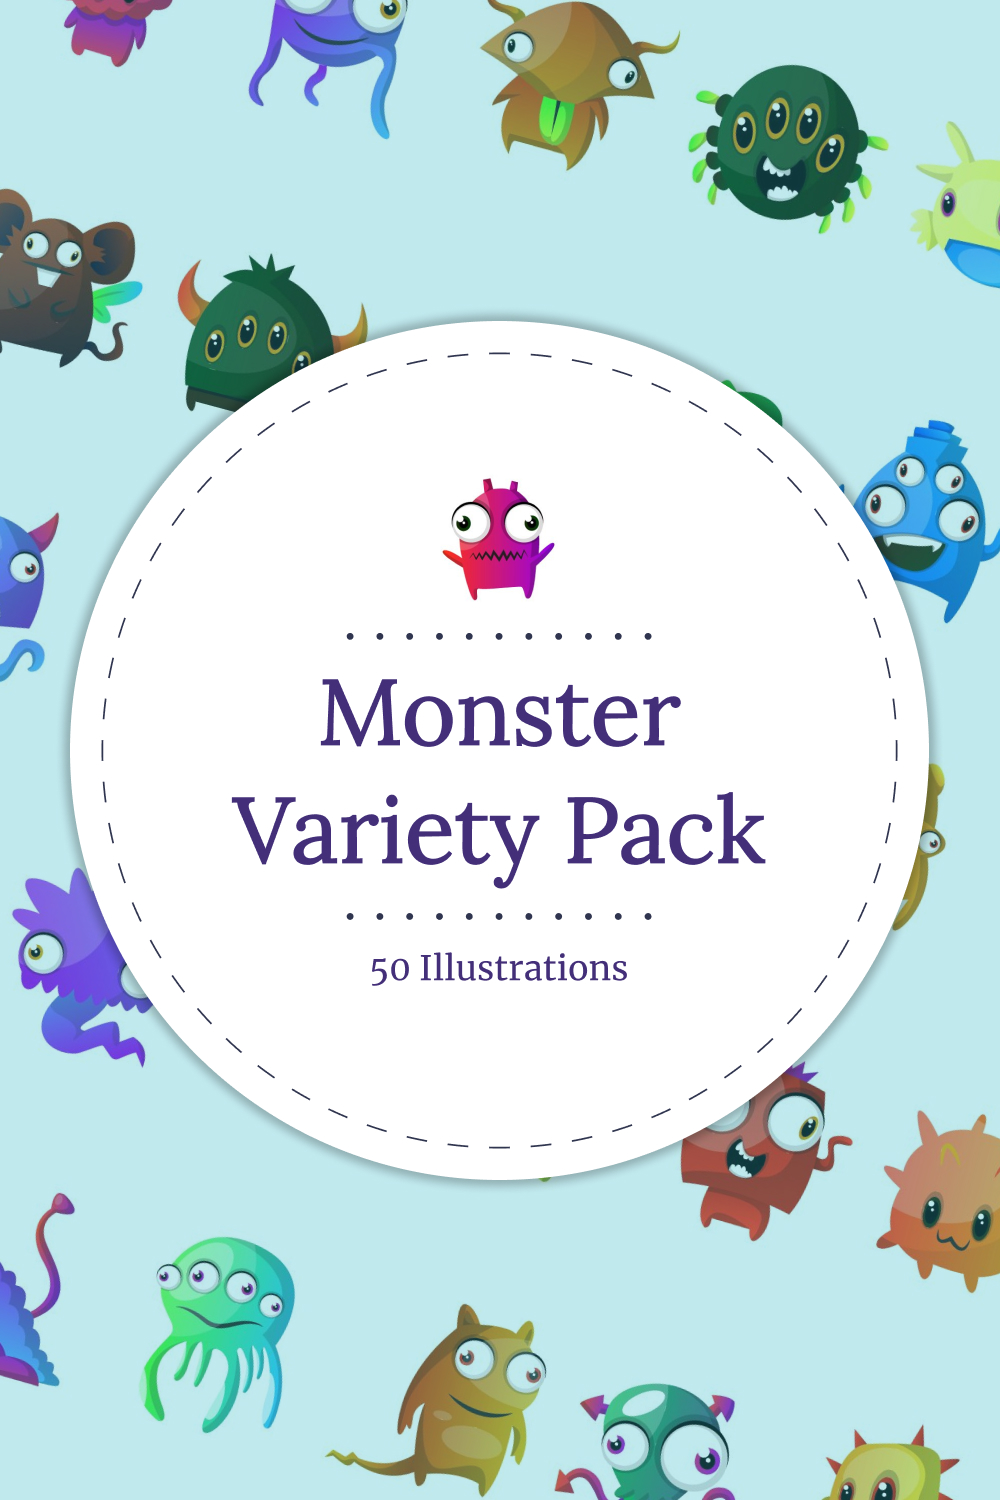 50x monster variety pack illustrations 02 953